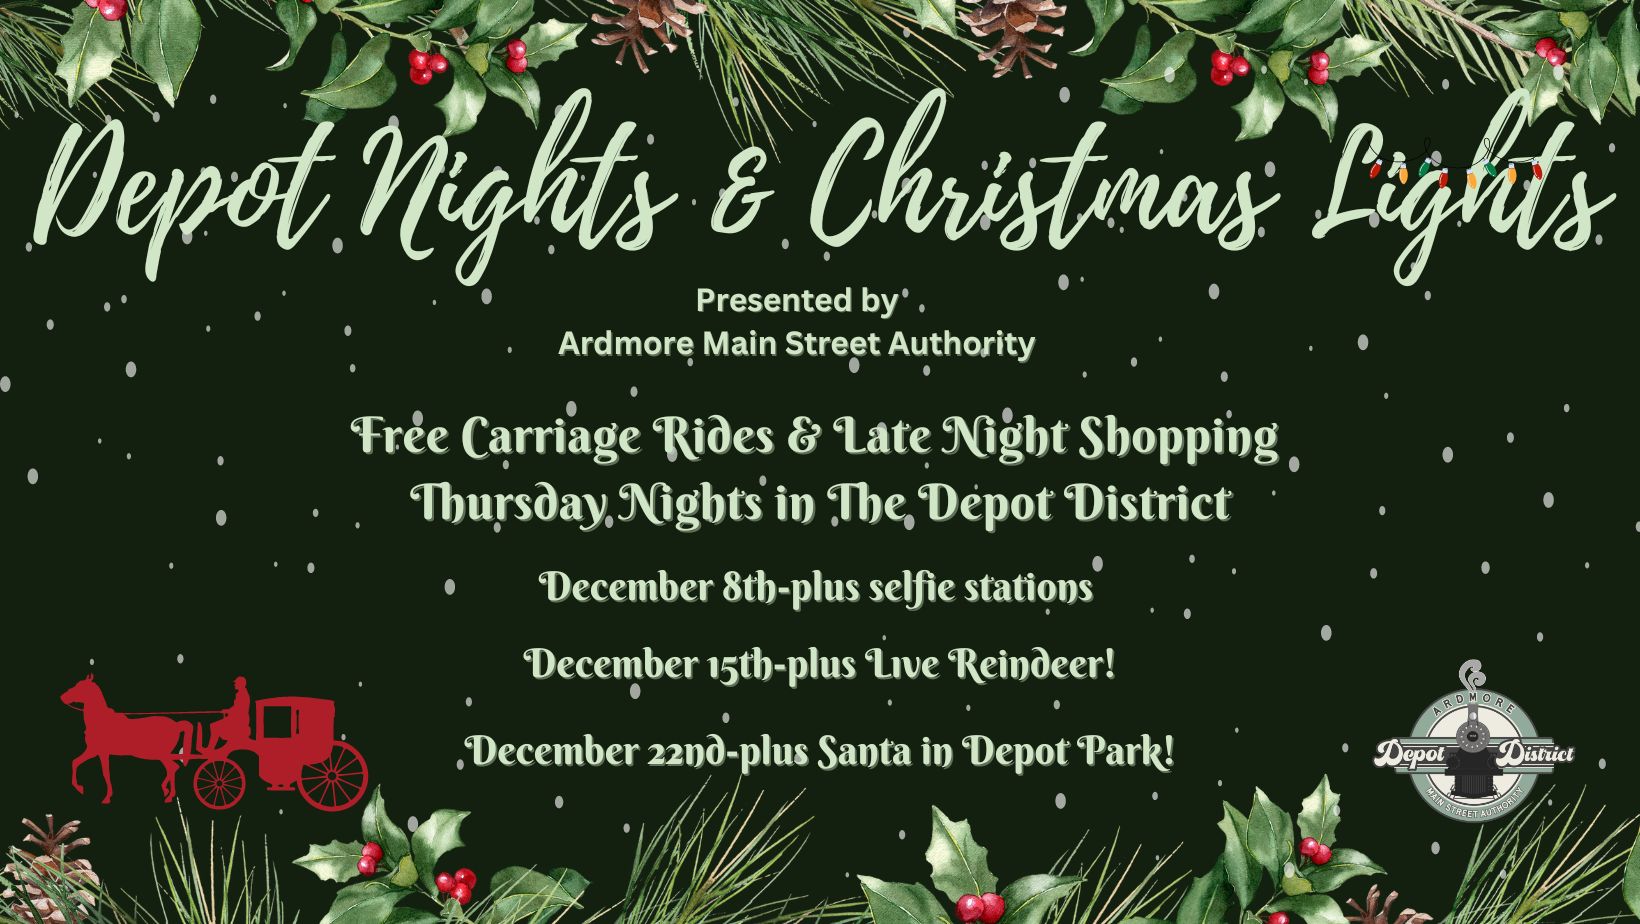 Depot Nights & Christmas Lights